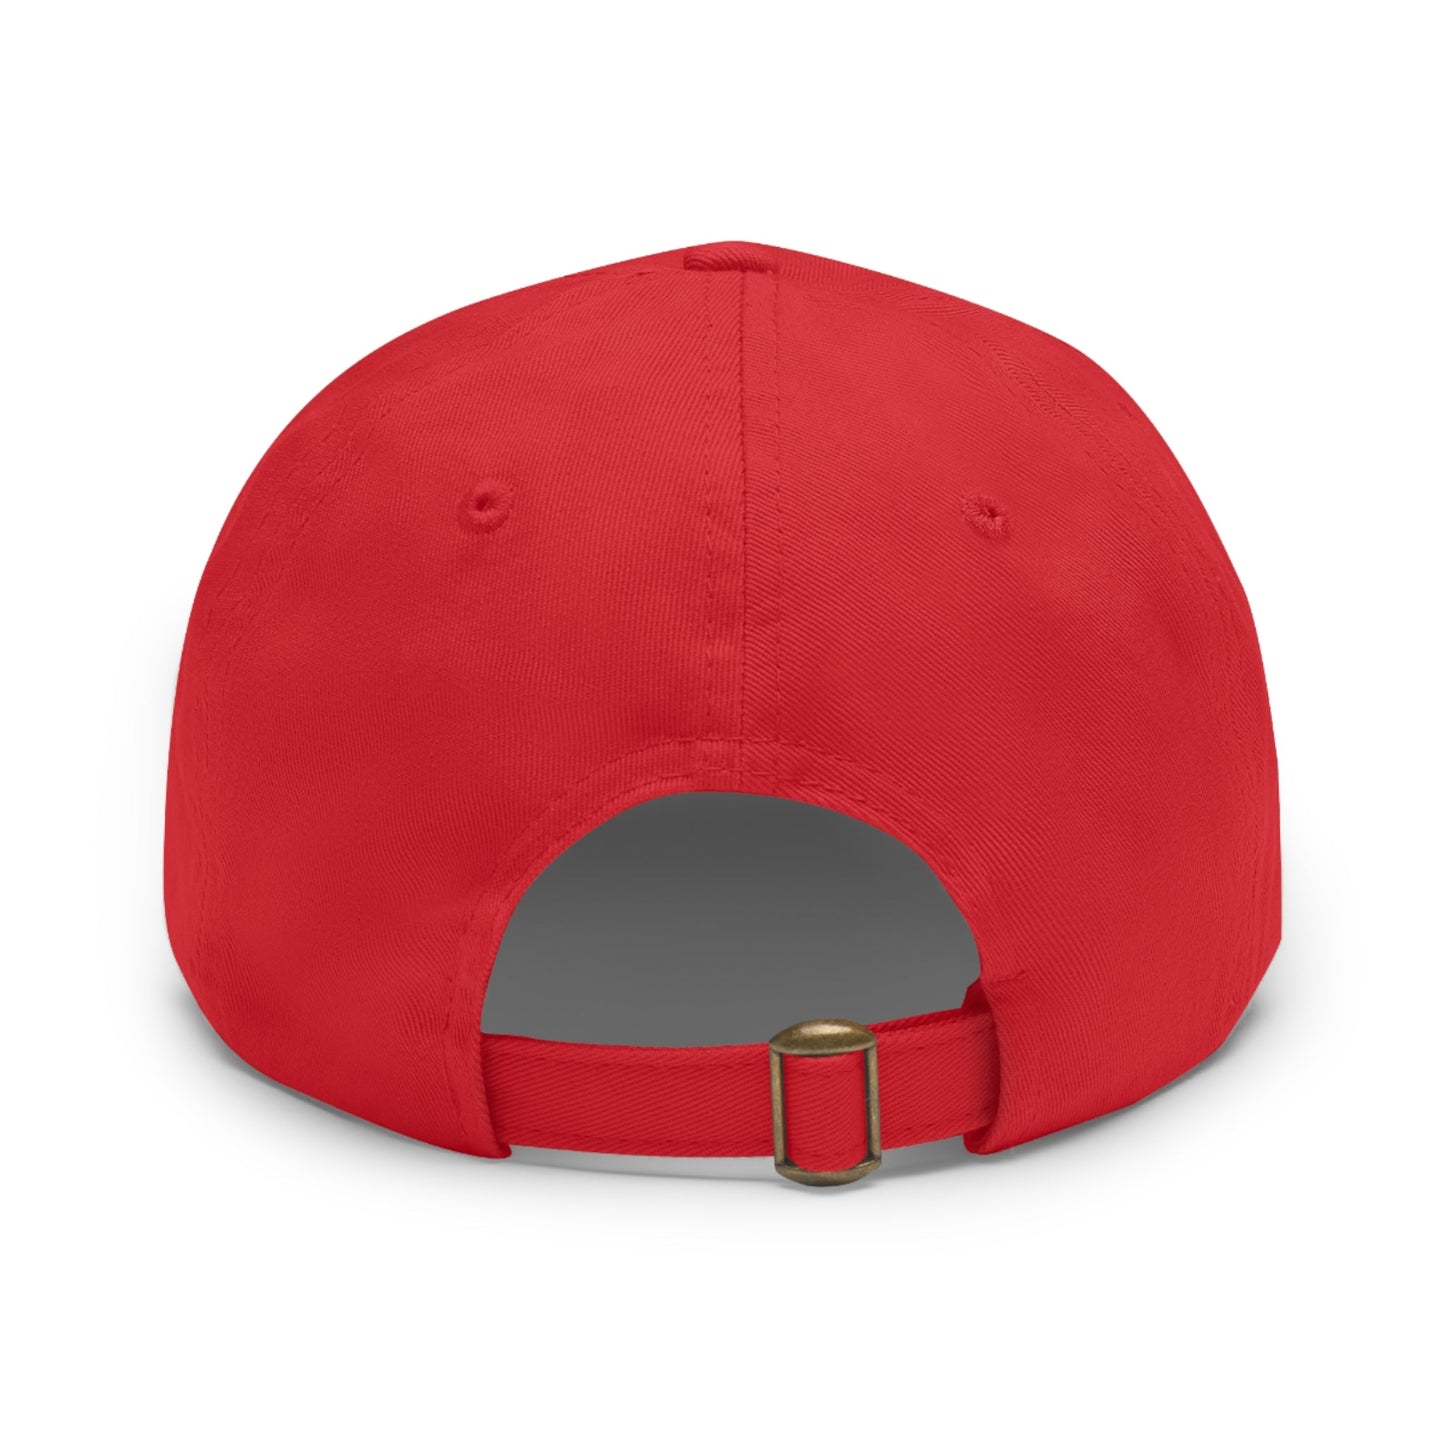 CrazyYetiClothing, CYC, Yeti Ball Cap (Hat with Name & Logo, Round), Hats